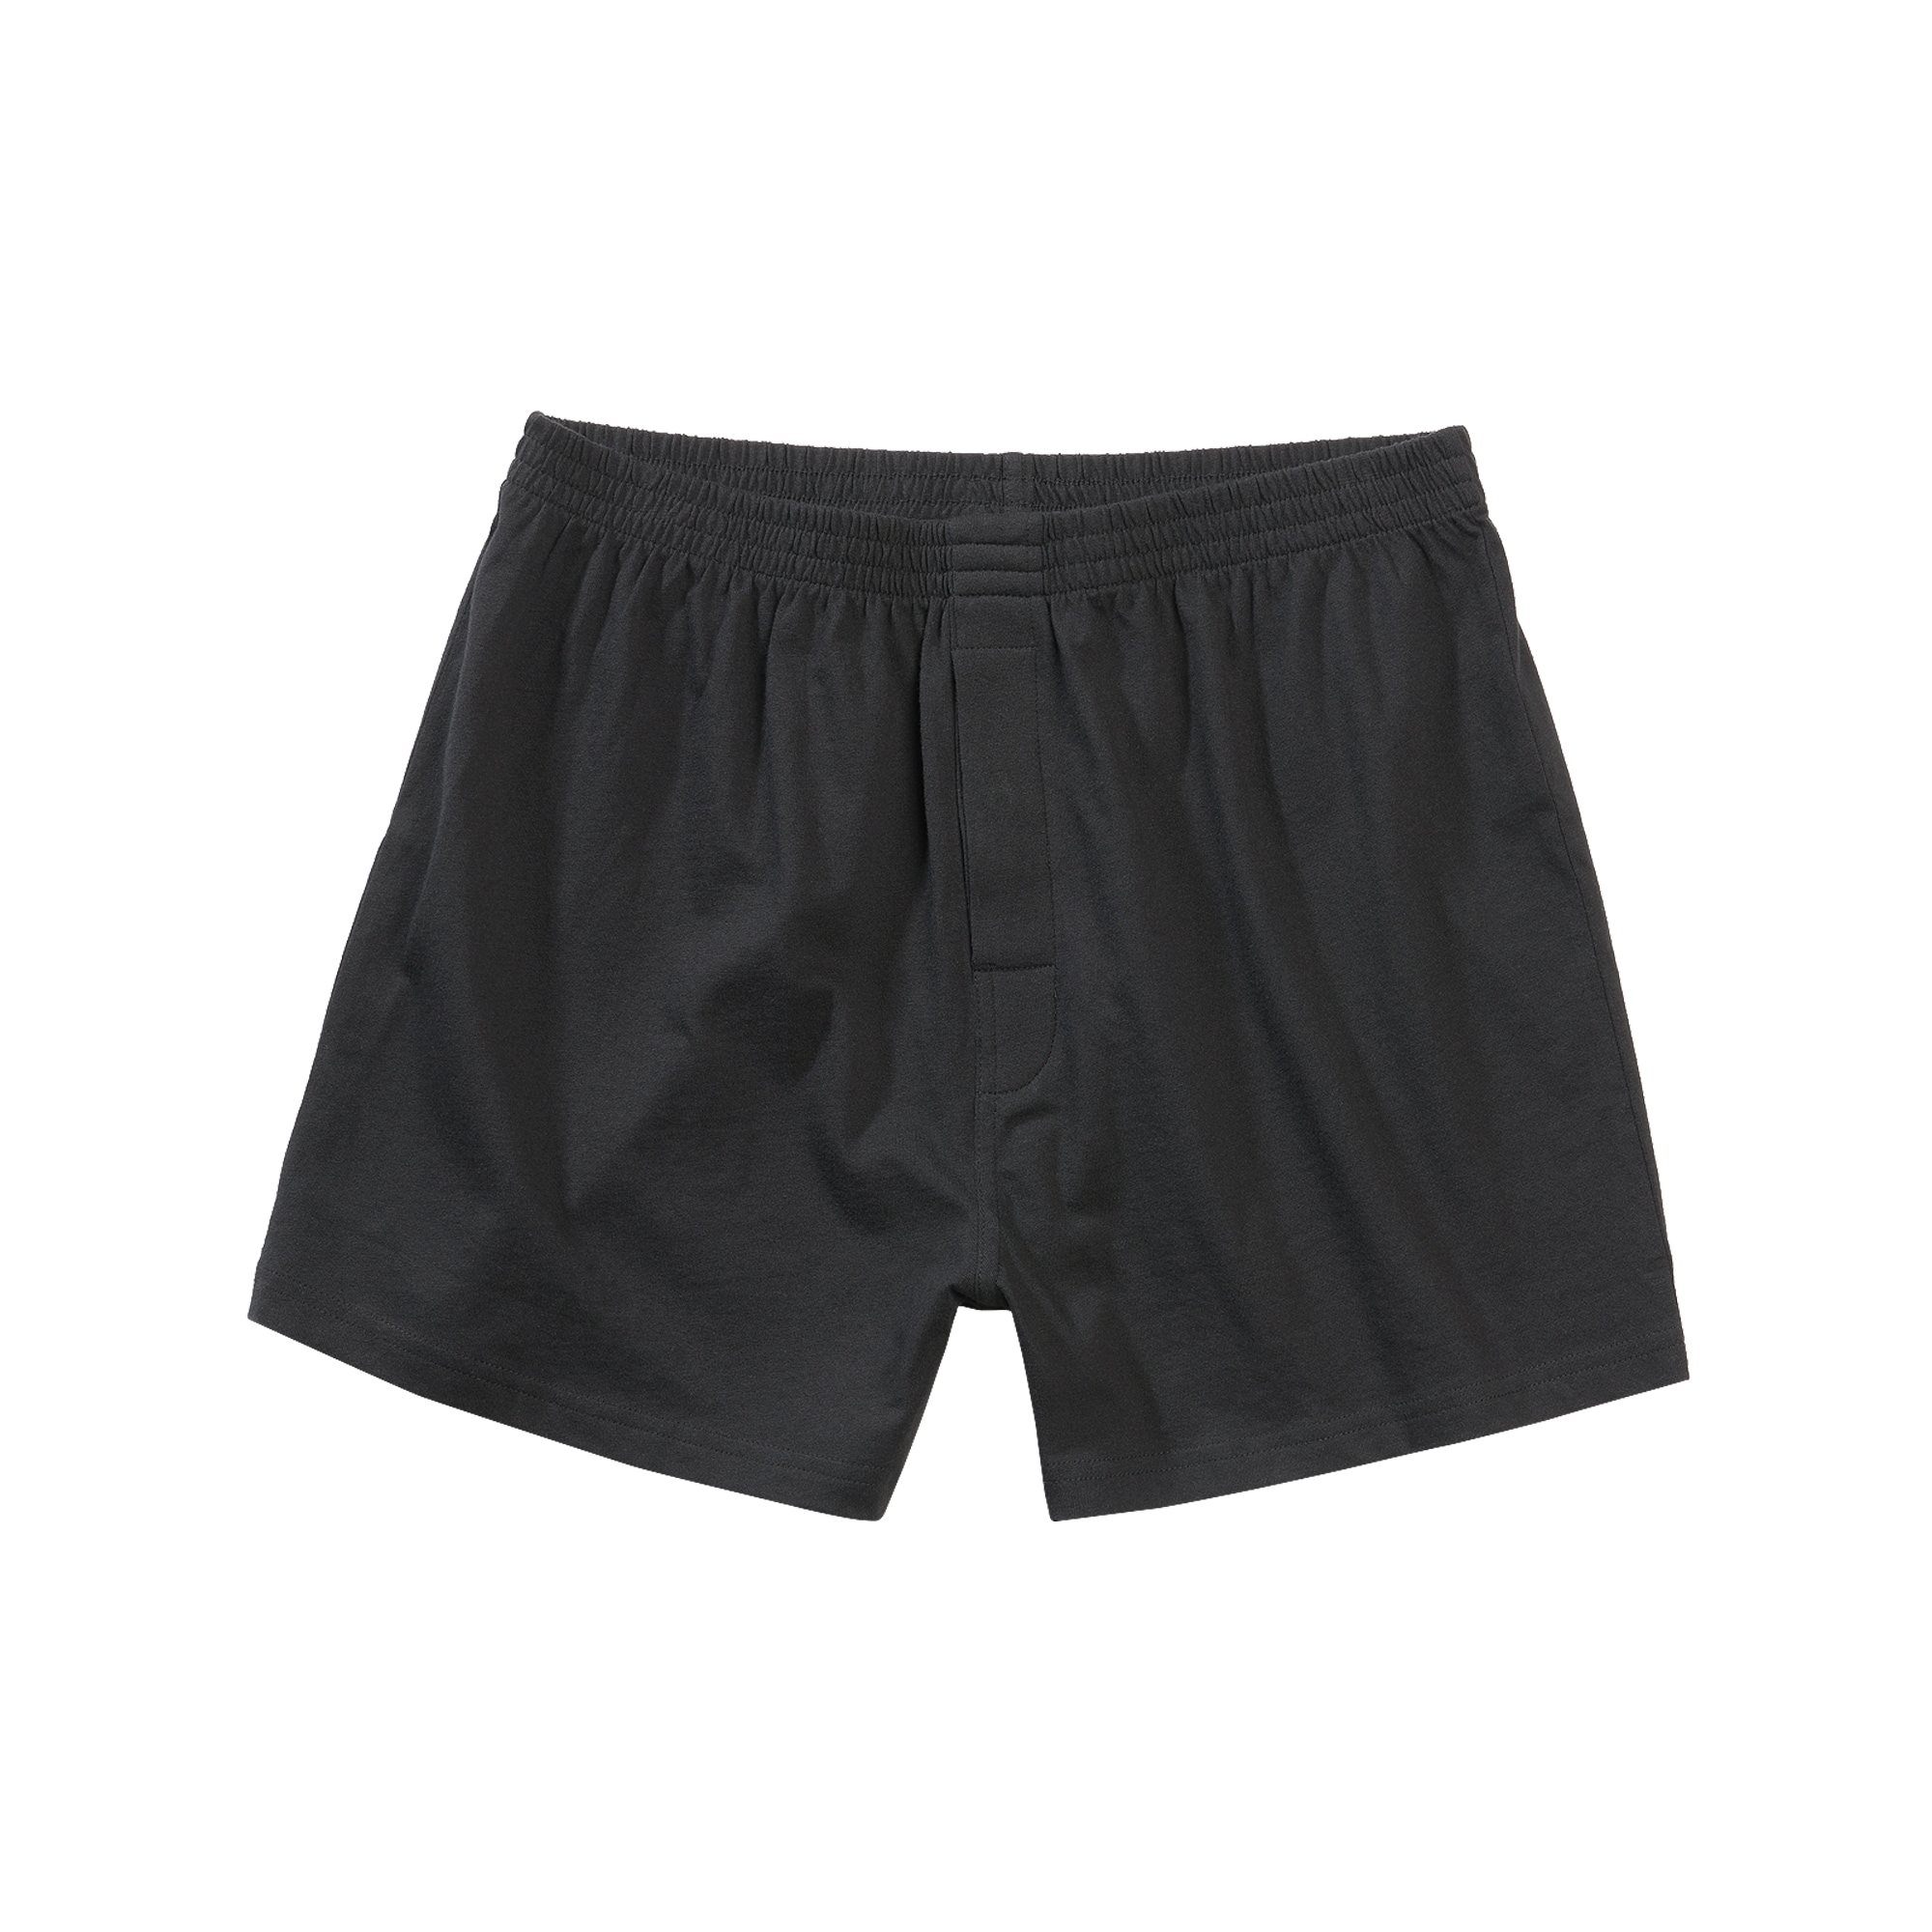 Purchase the Brandit Boxer Shorts black by ASMC